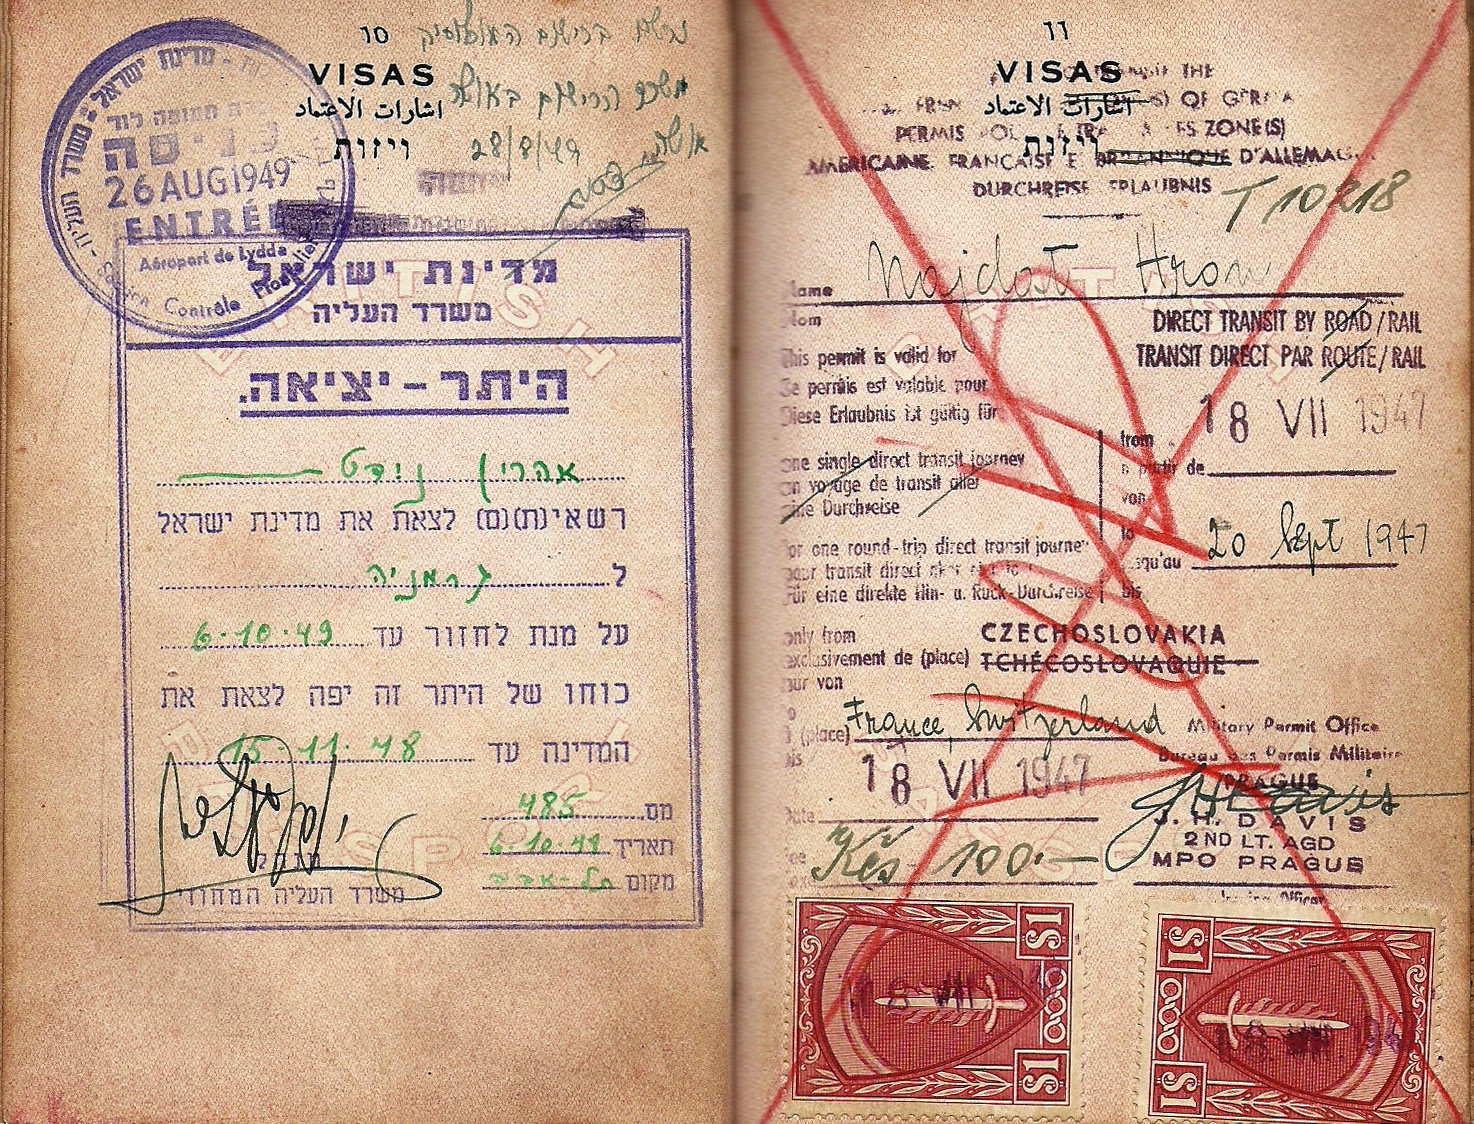 Israeli special visa for Germany - 1948